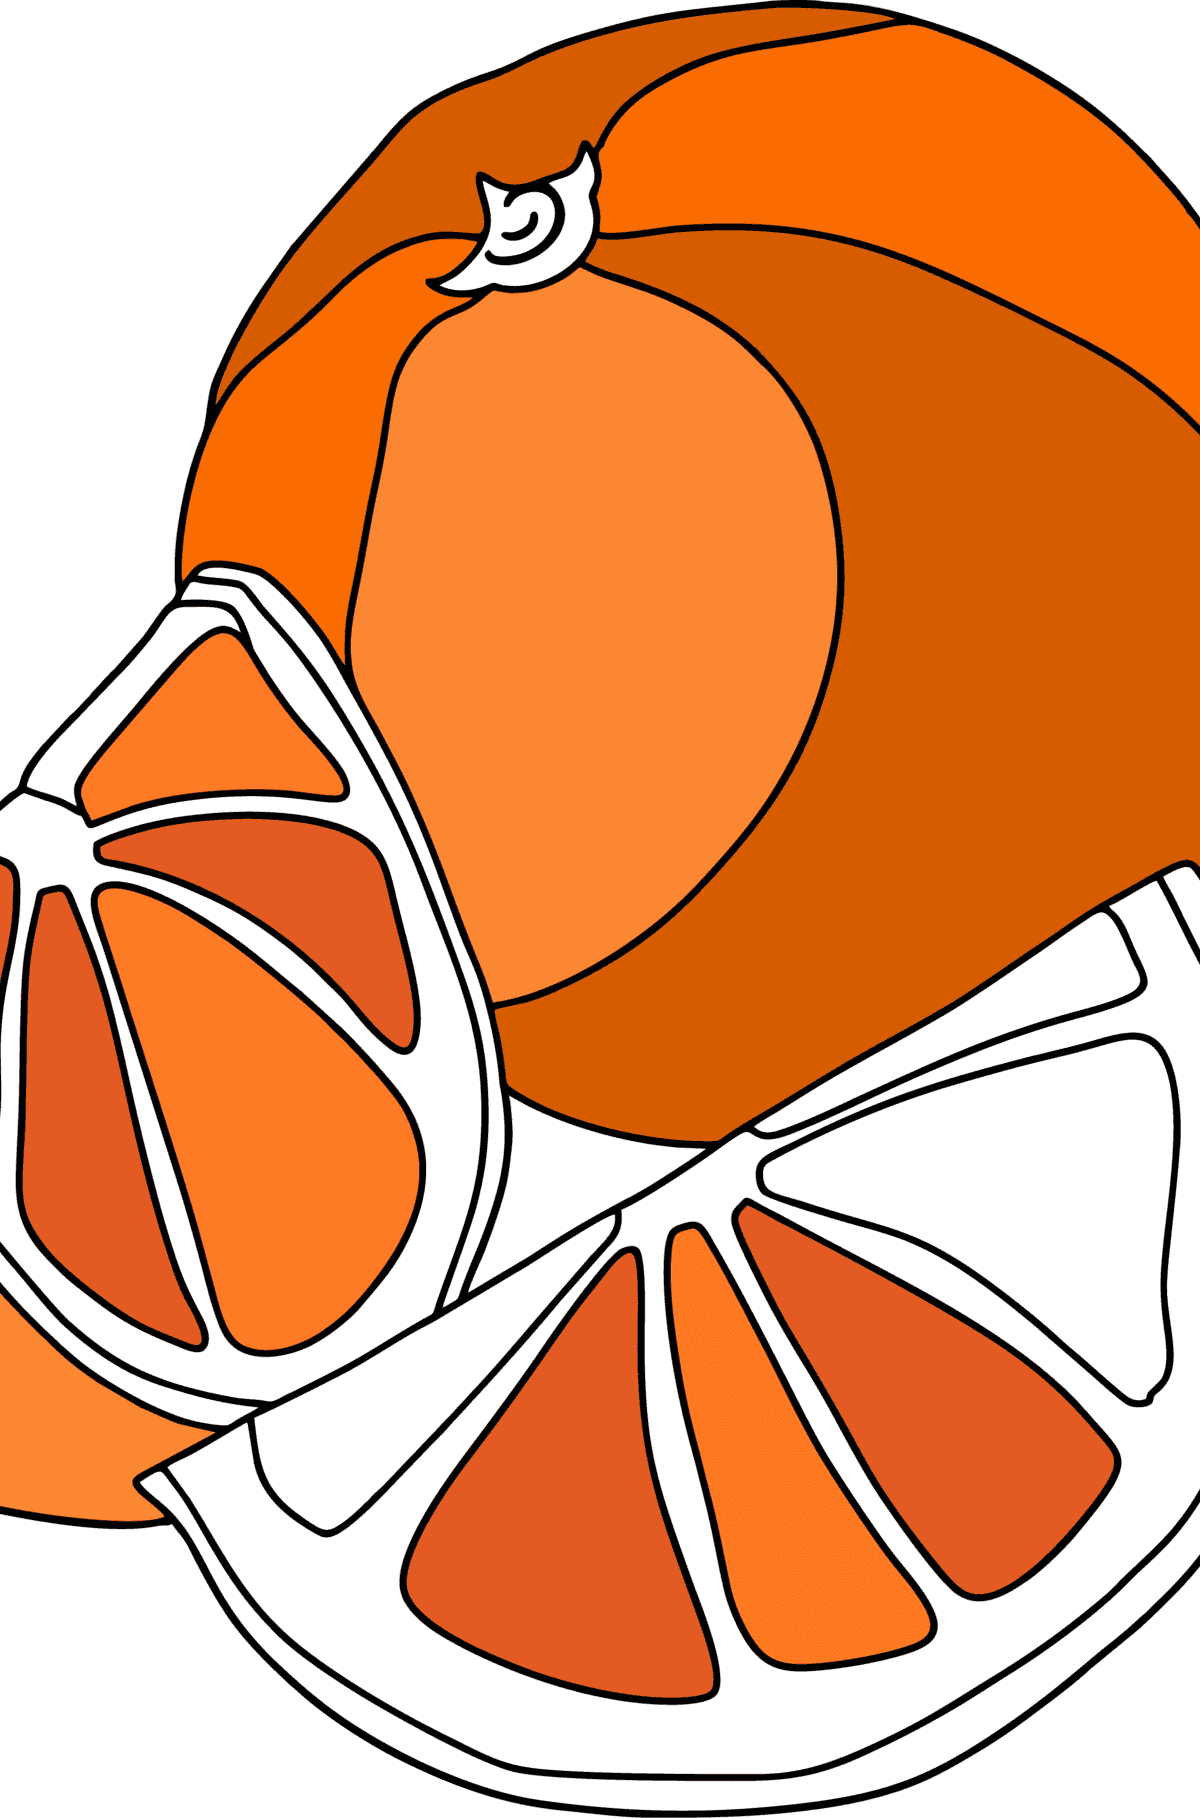 Долька апельсина раскраска